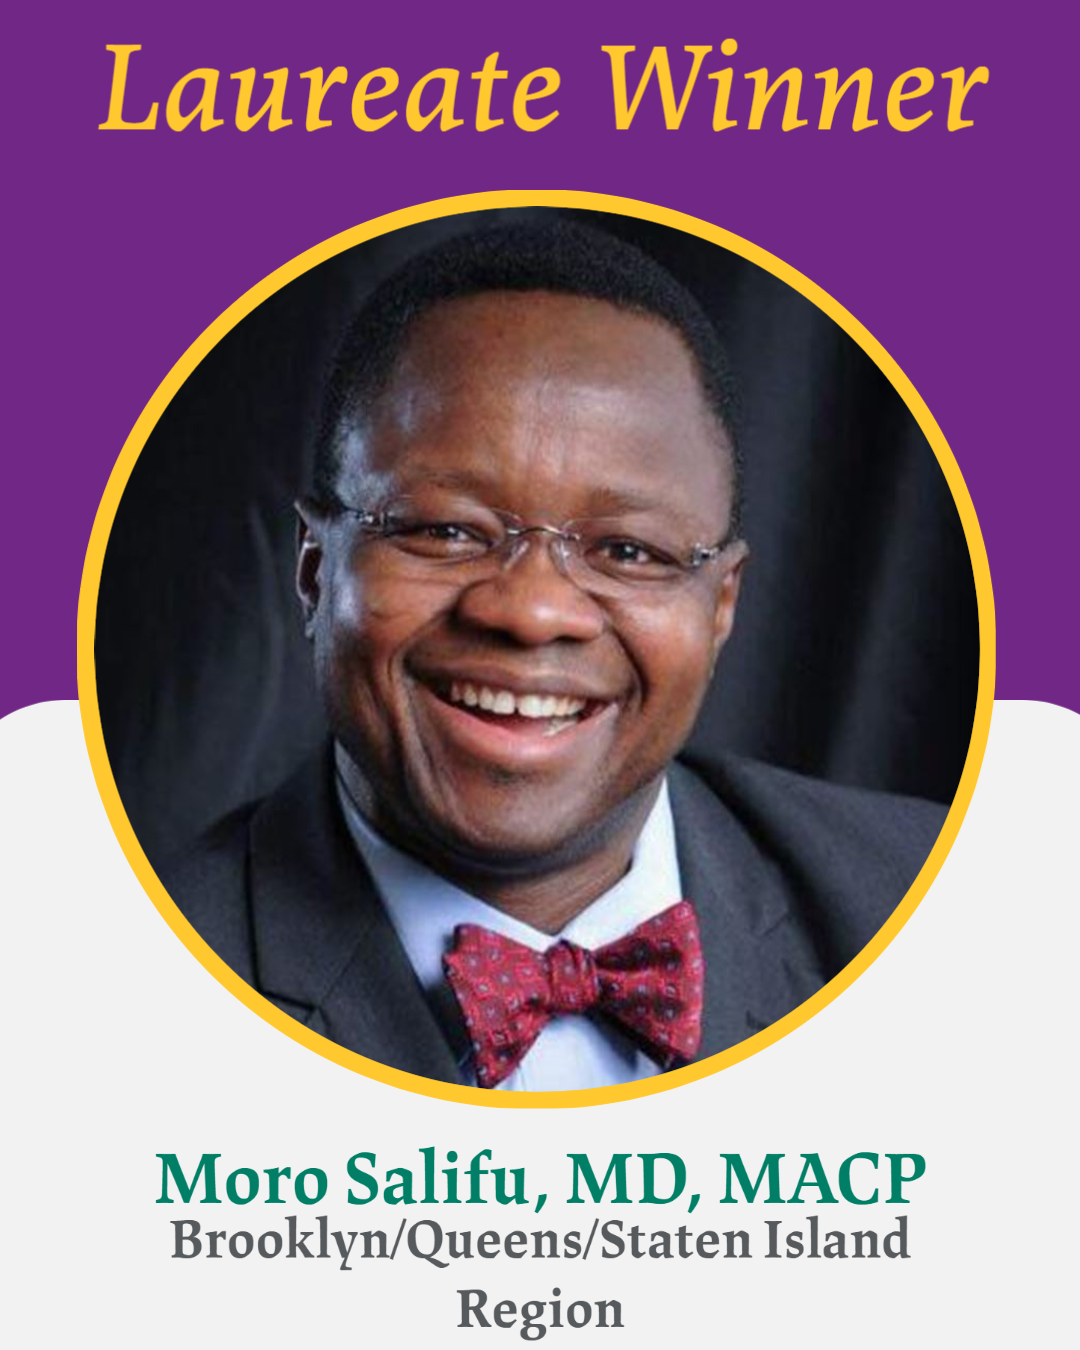 Dr. Moro Salifu